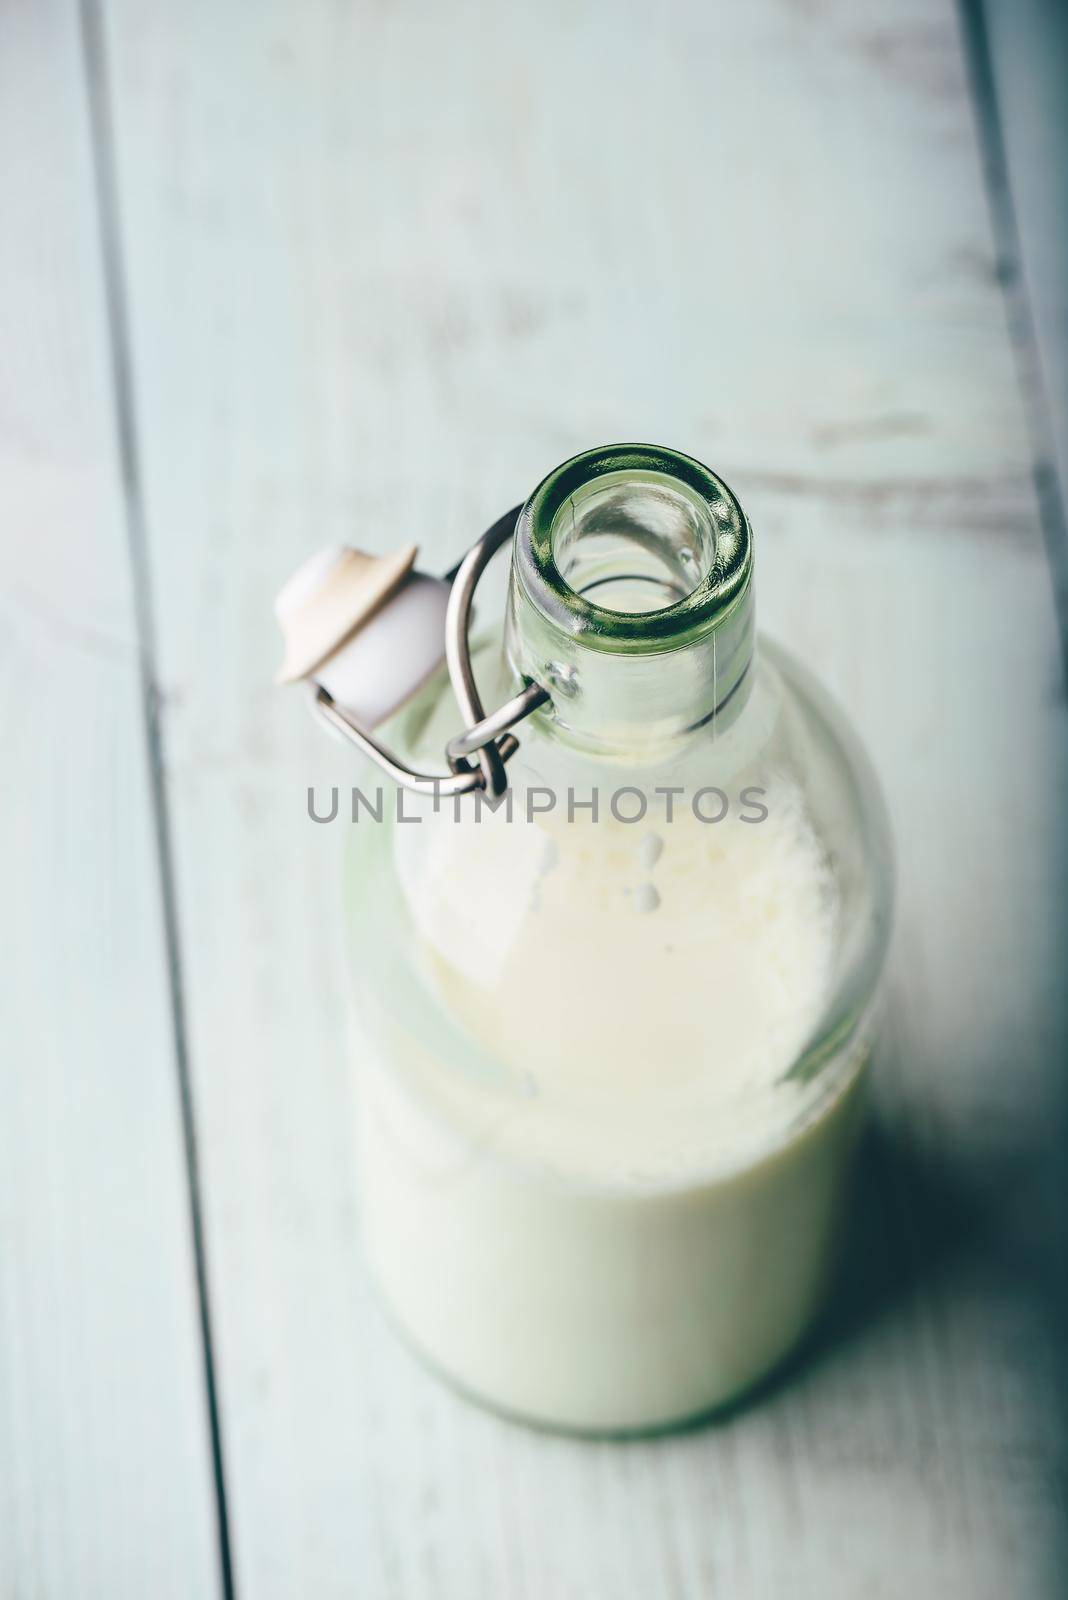 Milk in glass bottle on wooden surface by Seva_blsv